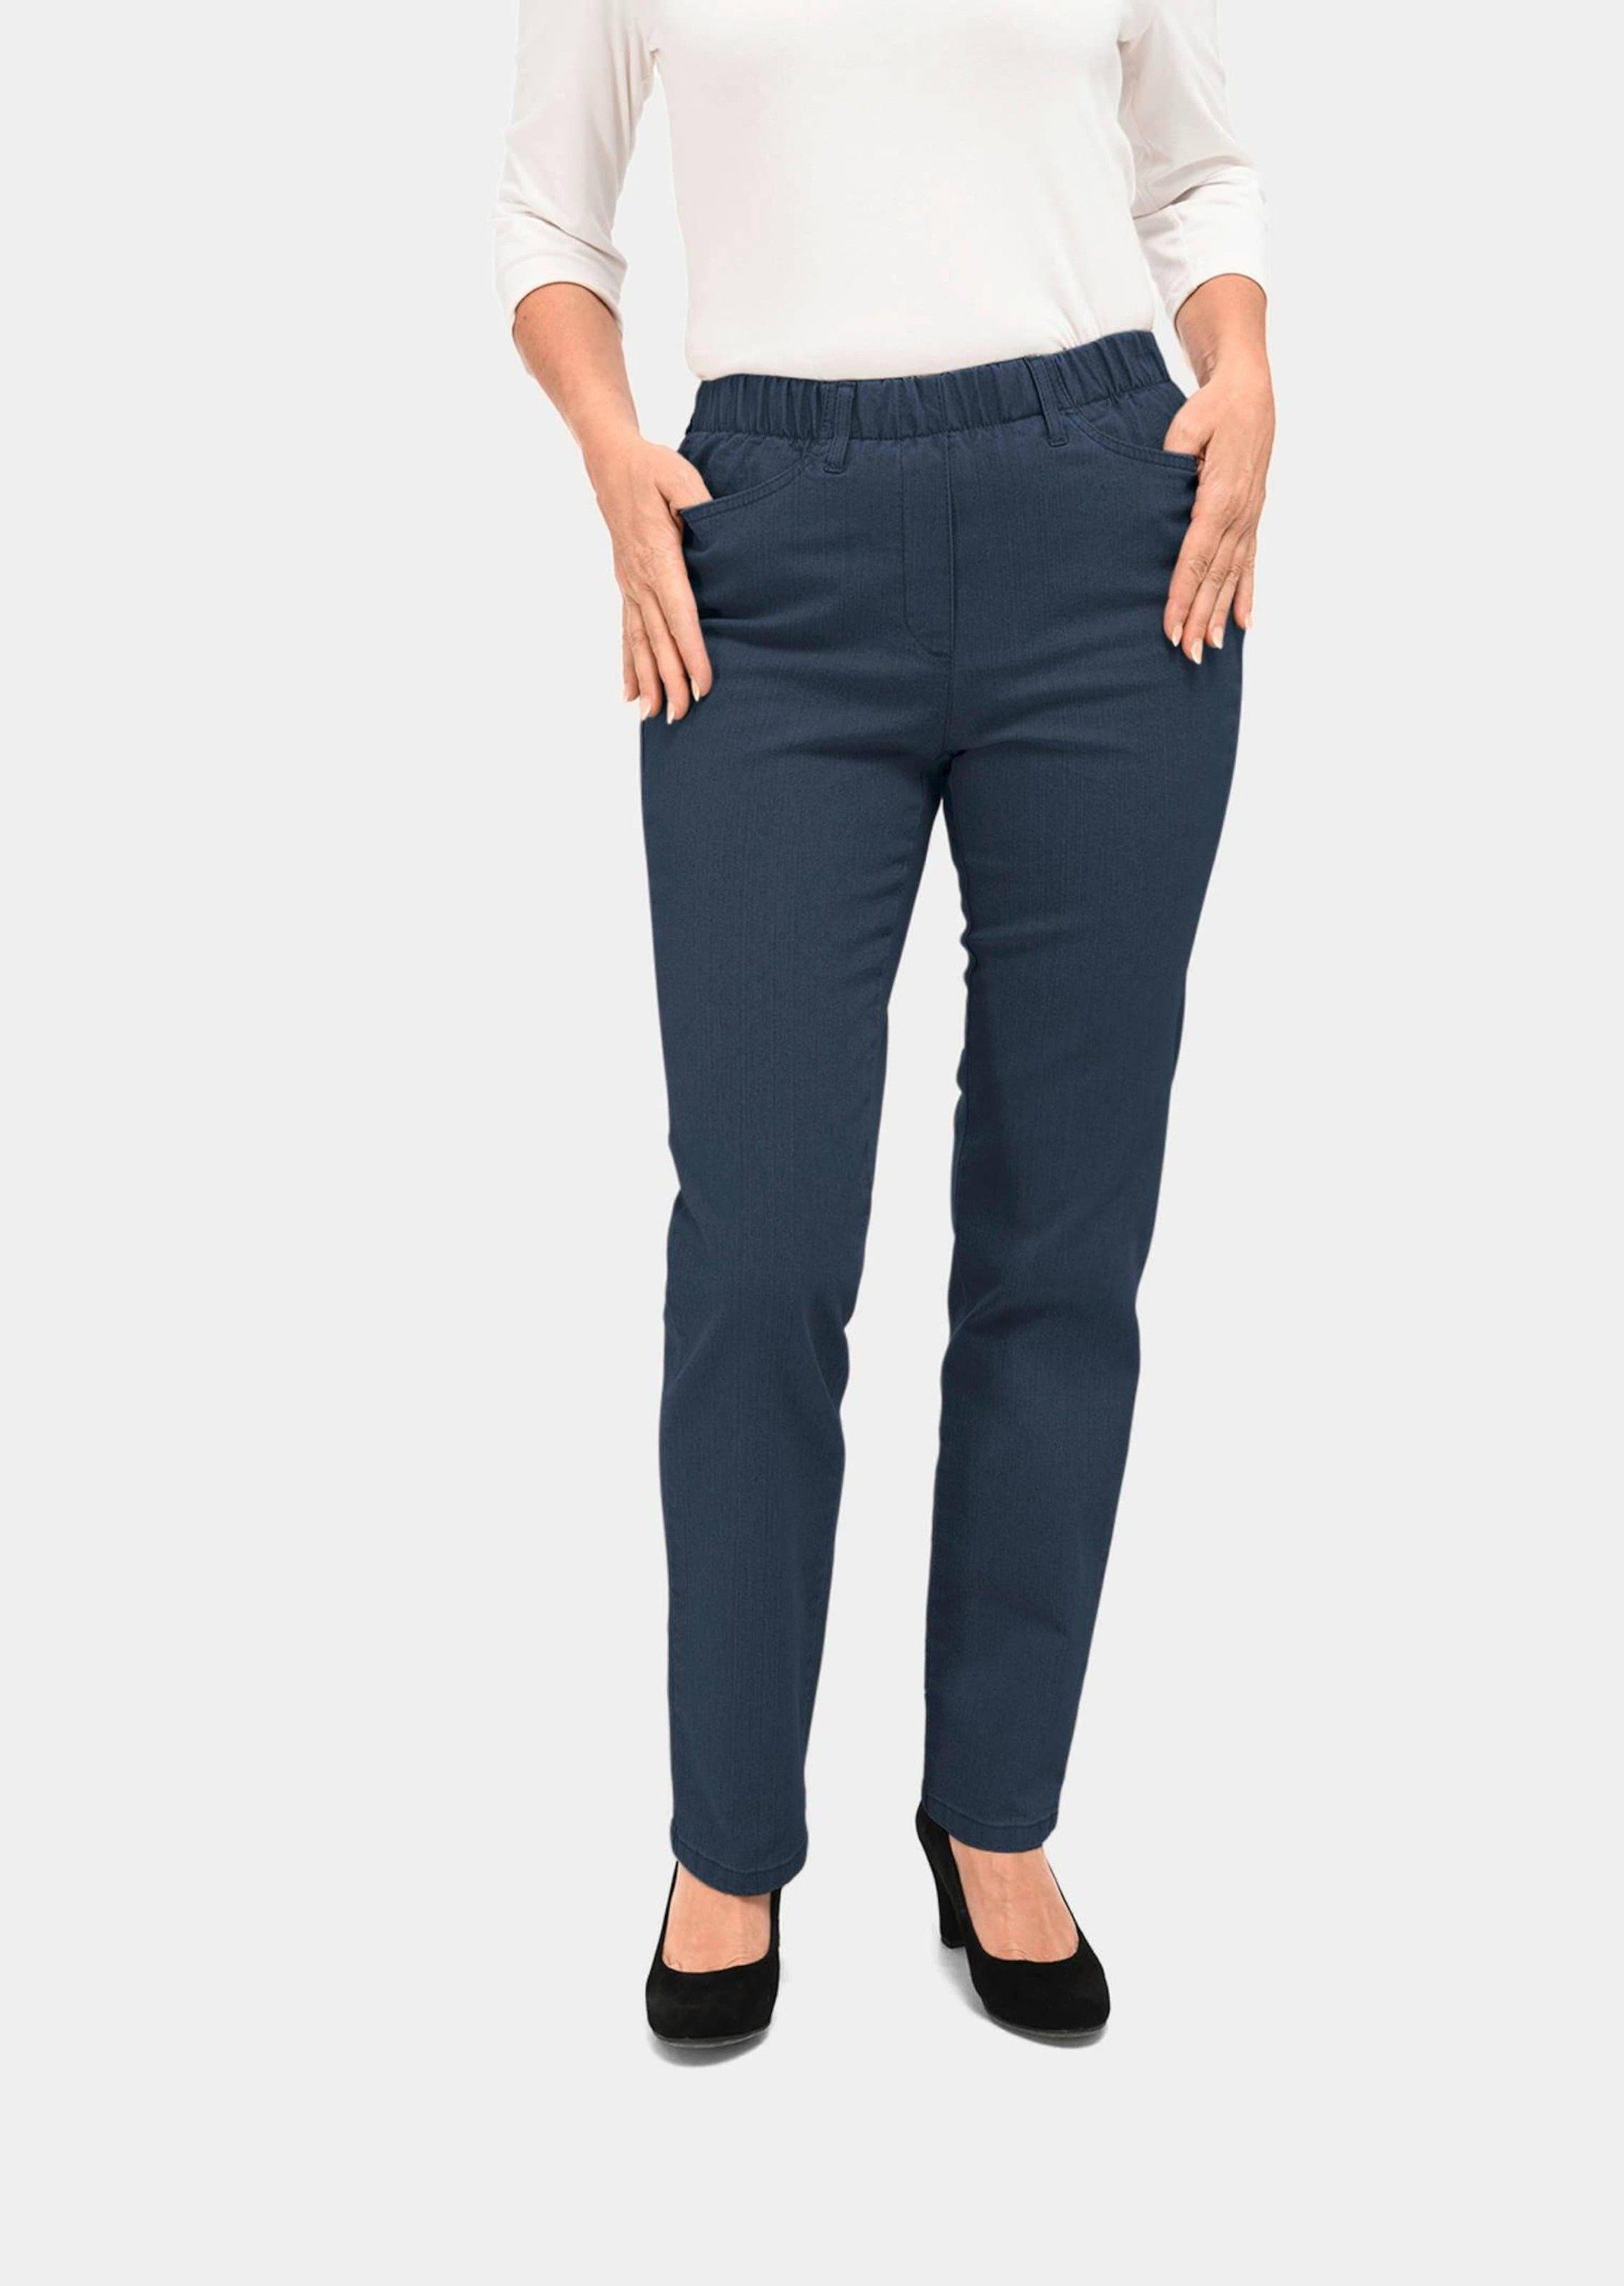 GOLDNER Bequeme Jeans Klassische Jeansschlupfhose LOUISA dunkelblau | Straight-Fit Jeans